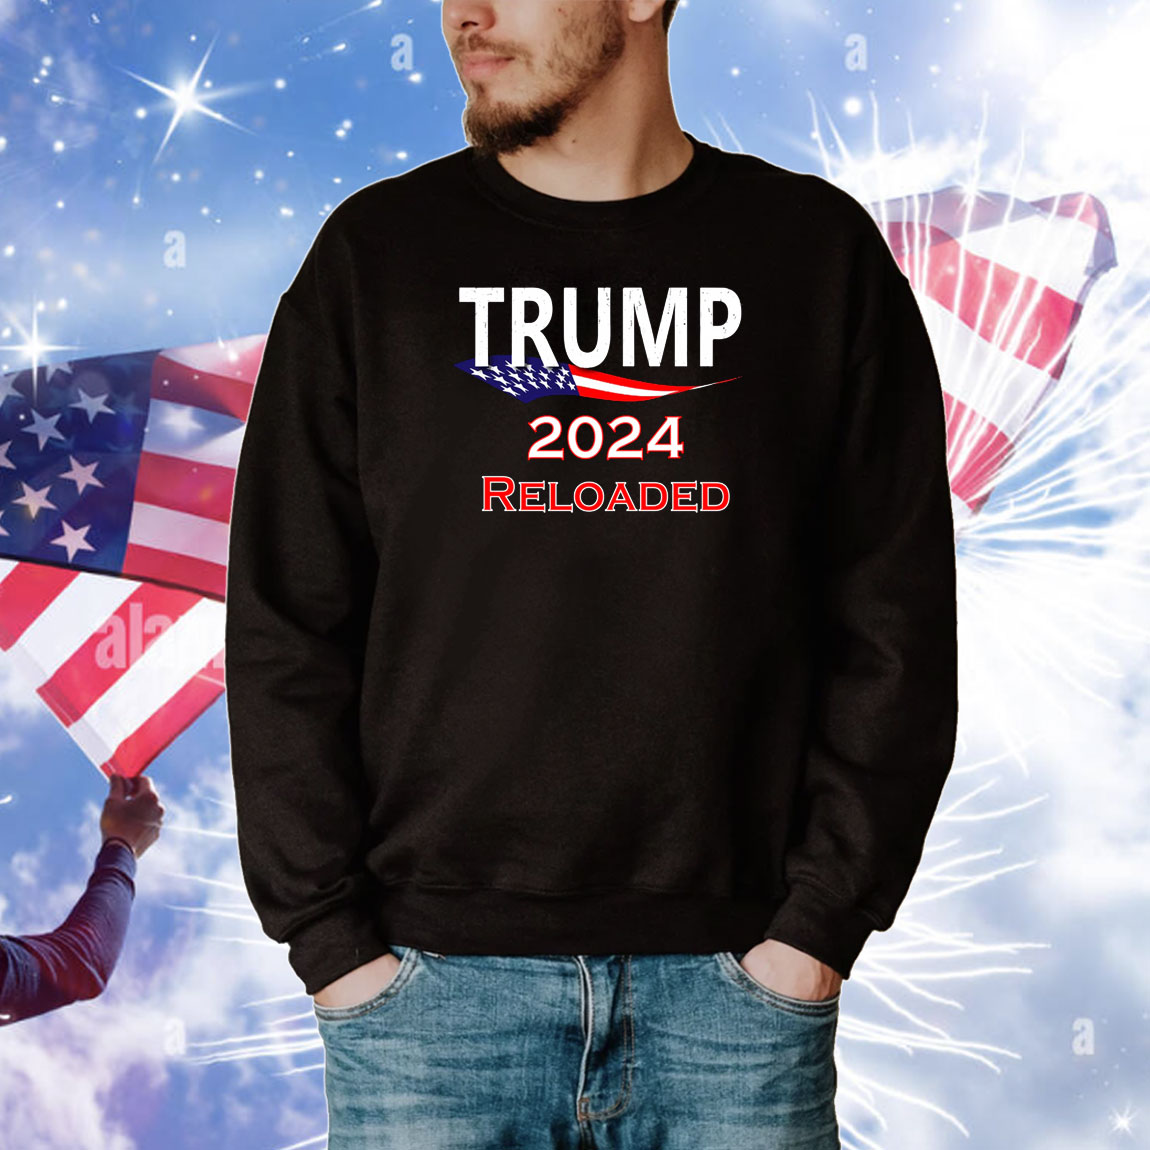 Trump 2024 Reloaded Tee Shirts